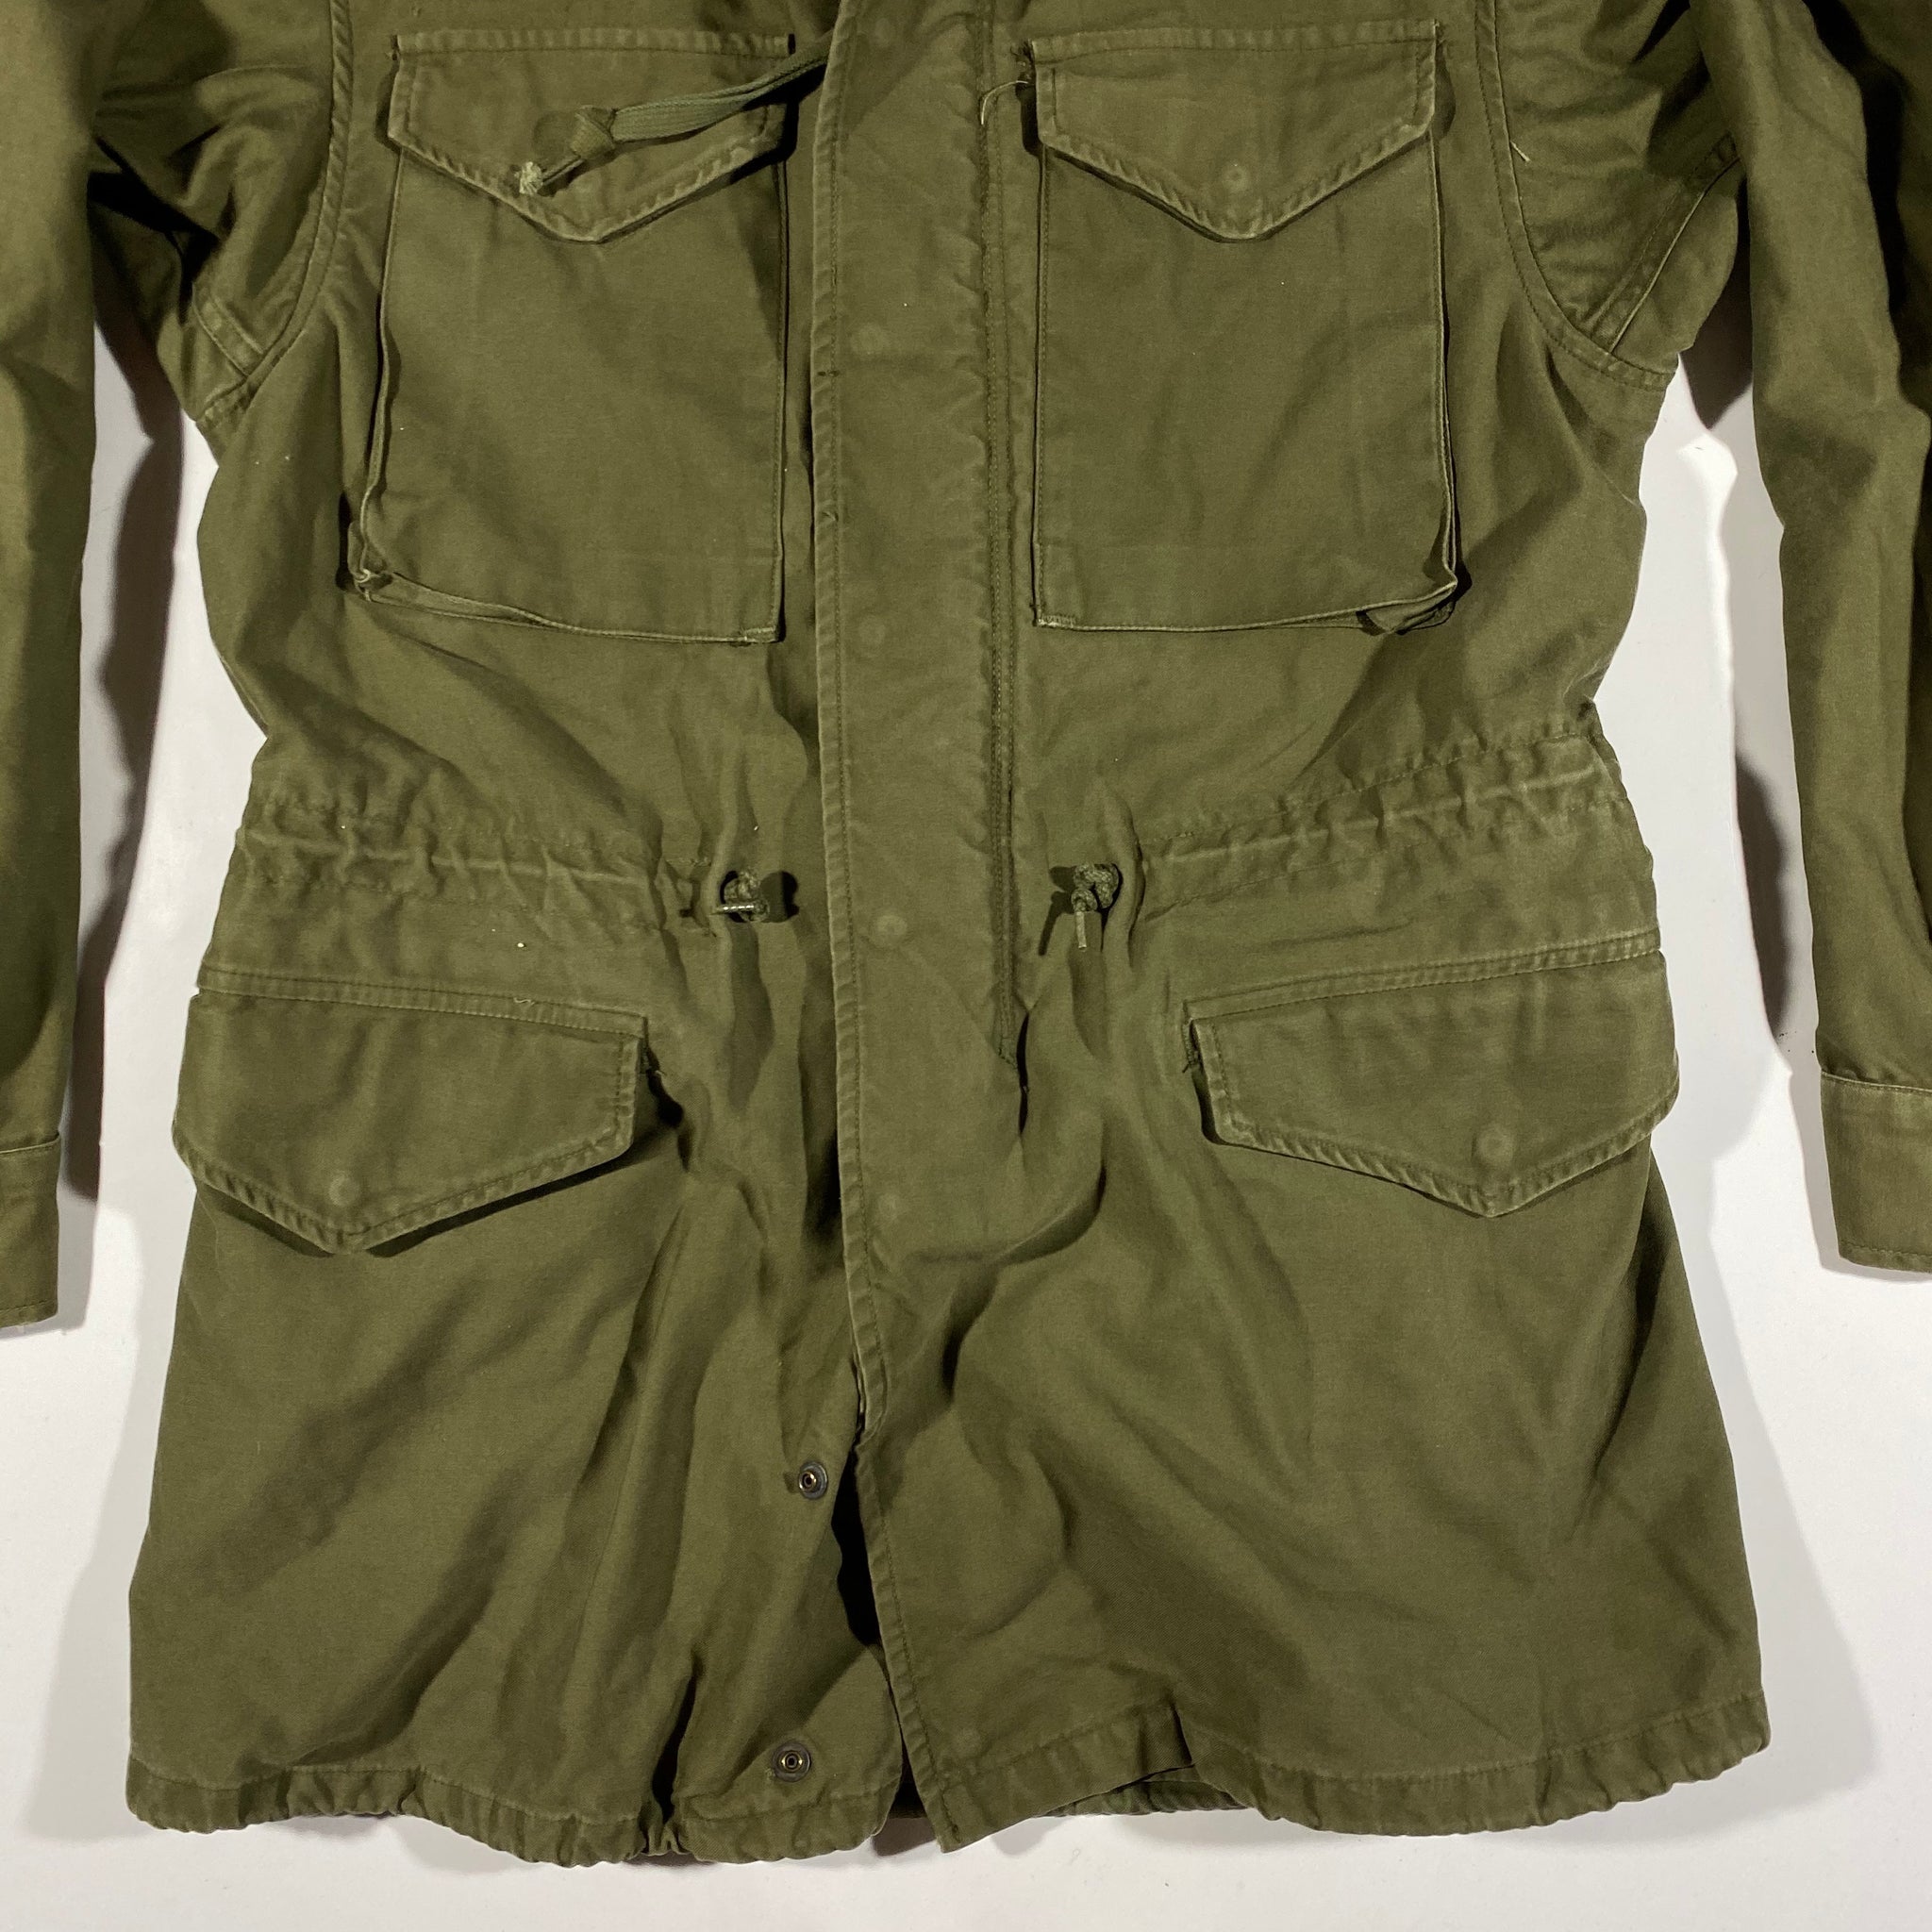 70s Military Jacket Long Small